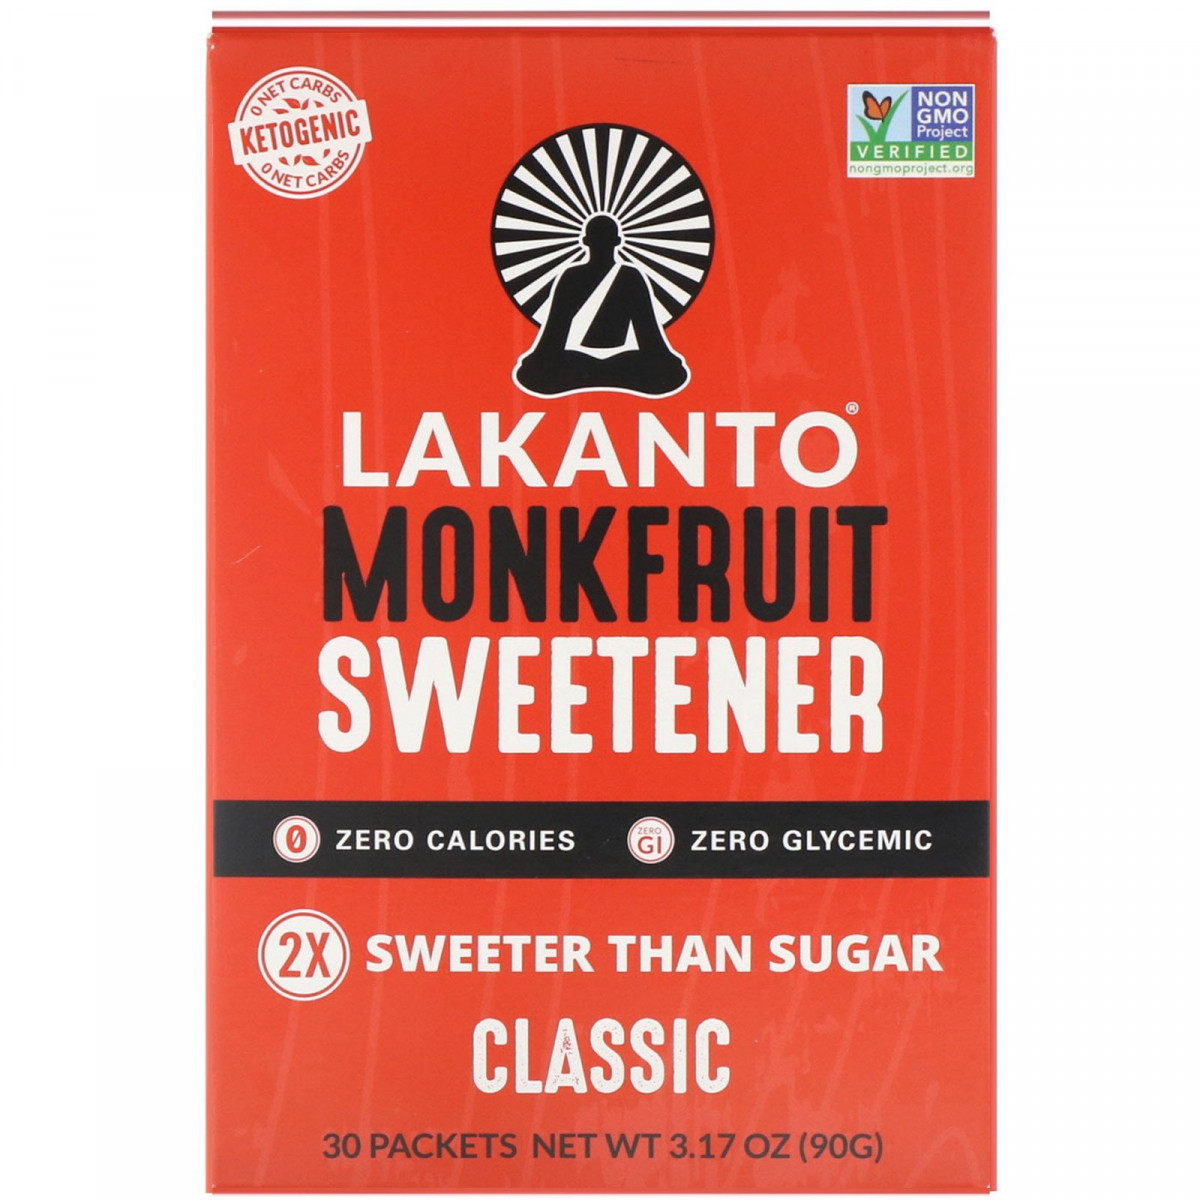 Підсолоджувач, класичний, Monkfruit Sweentener, Classic, Lakanto, 90 г